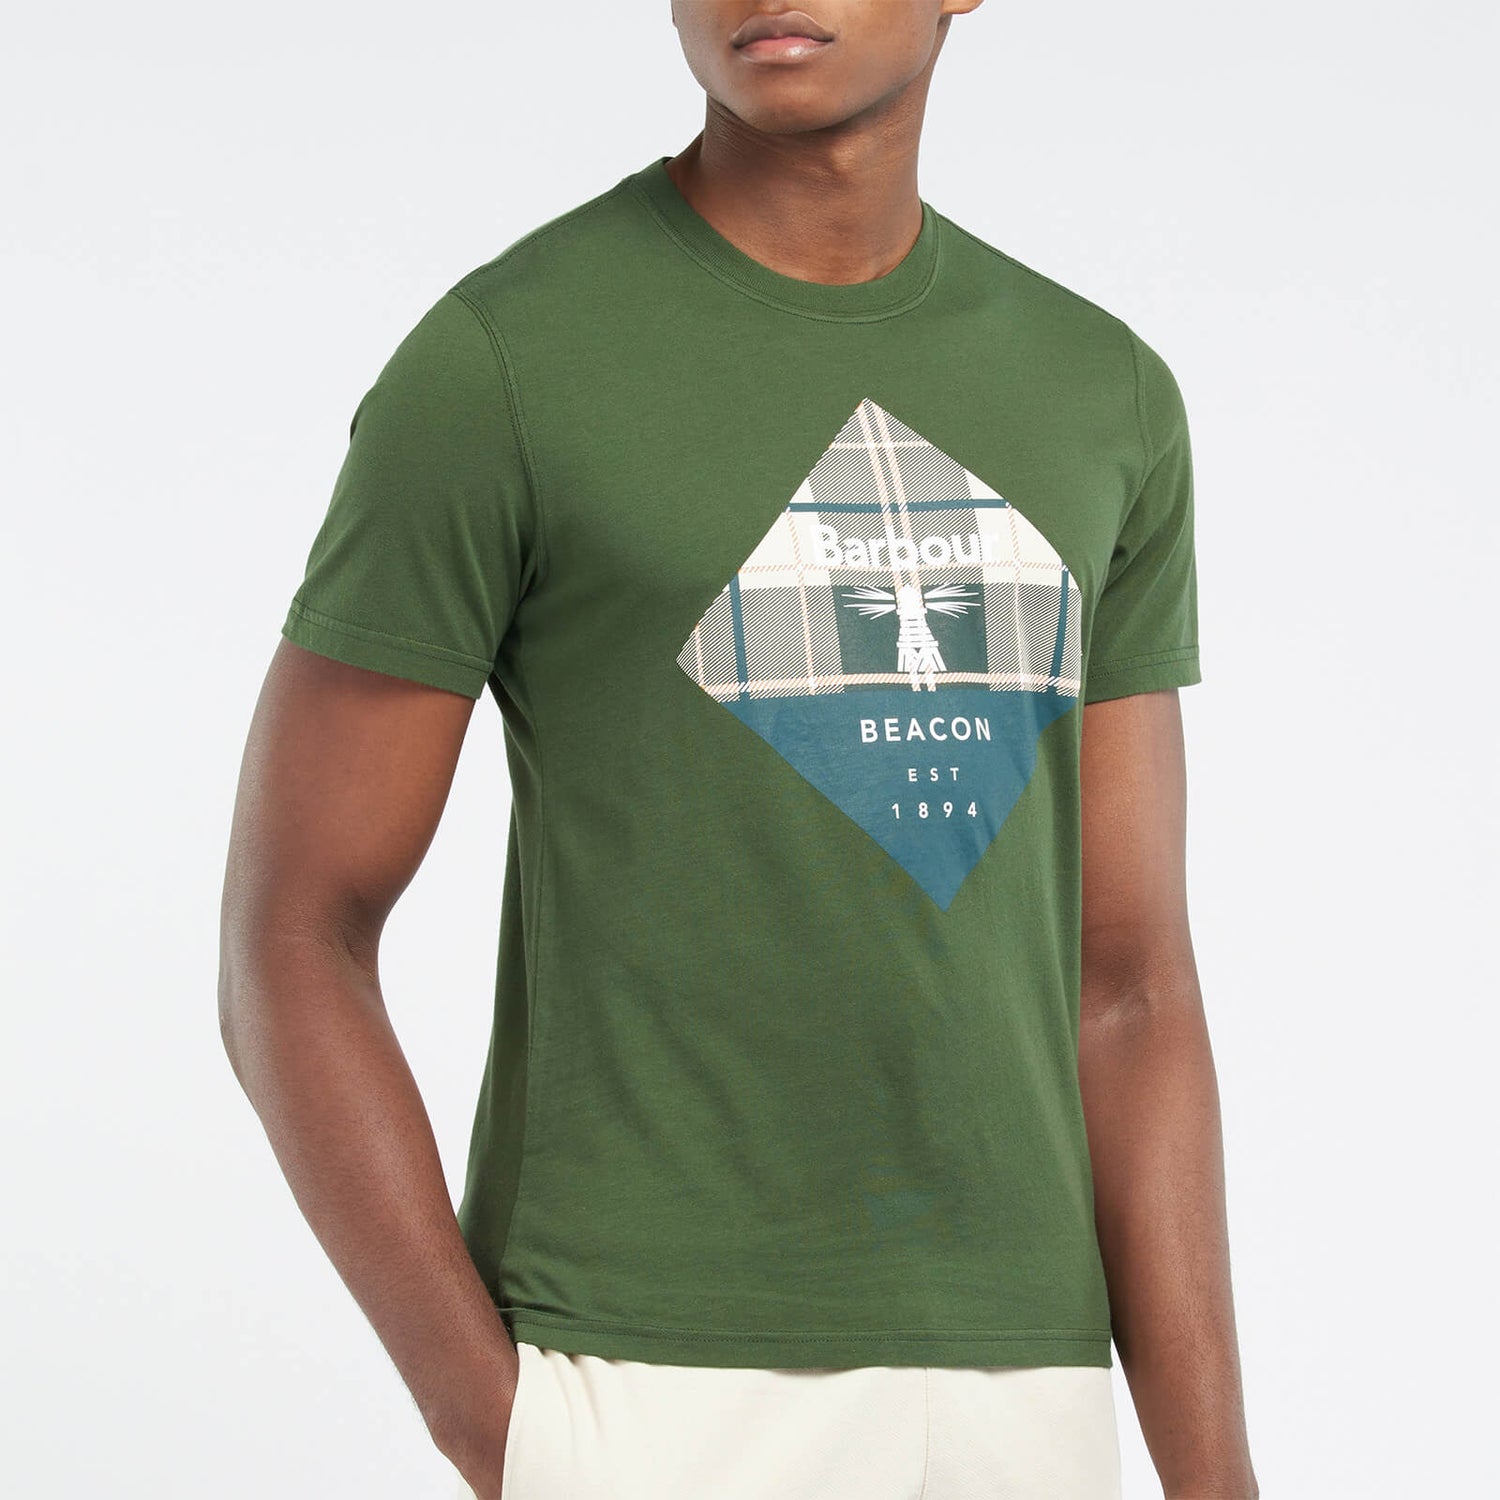 Barbour Beacon Men's Becker T-Shirt - Duffle Bag